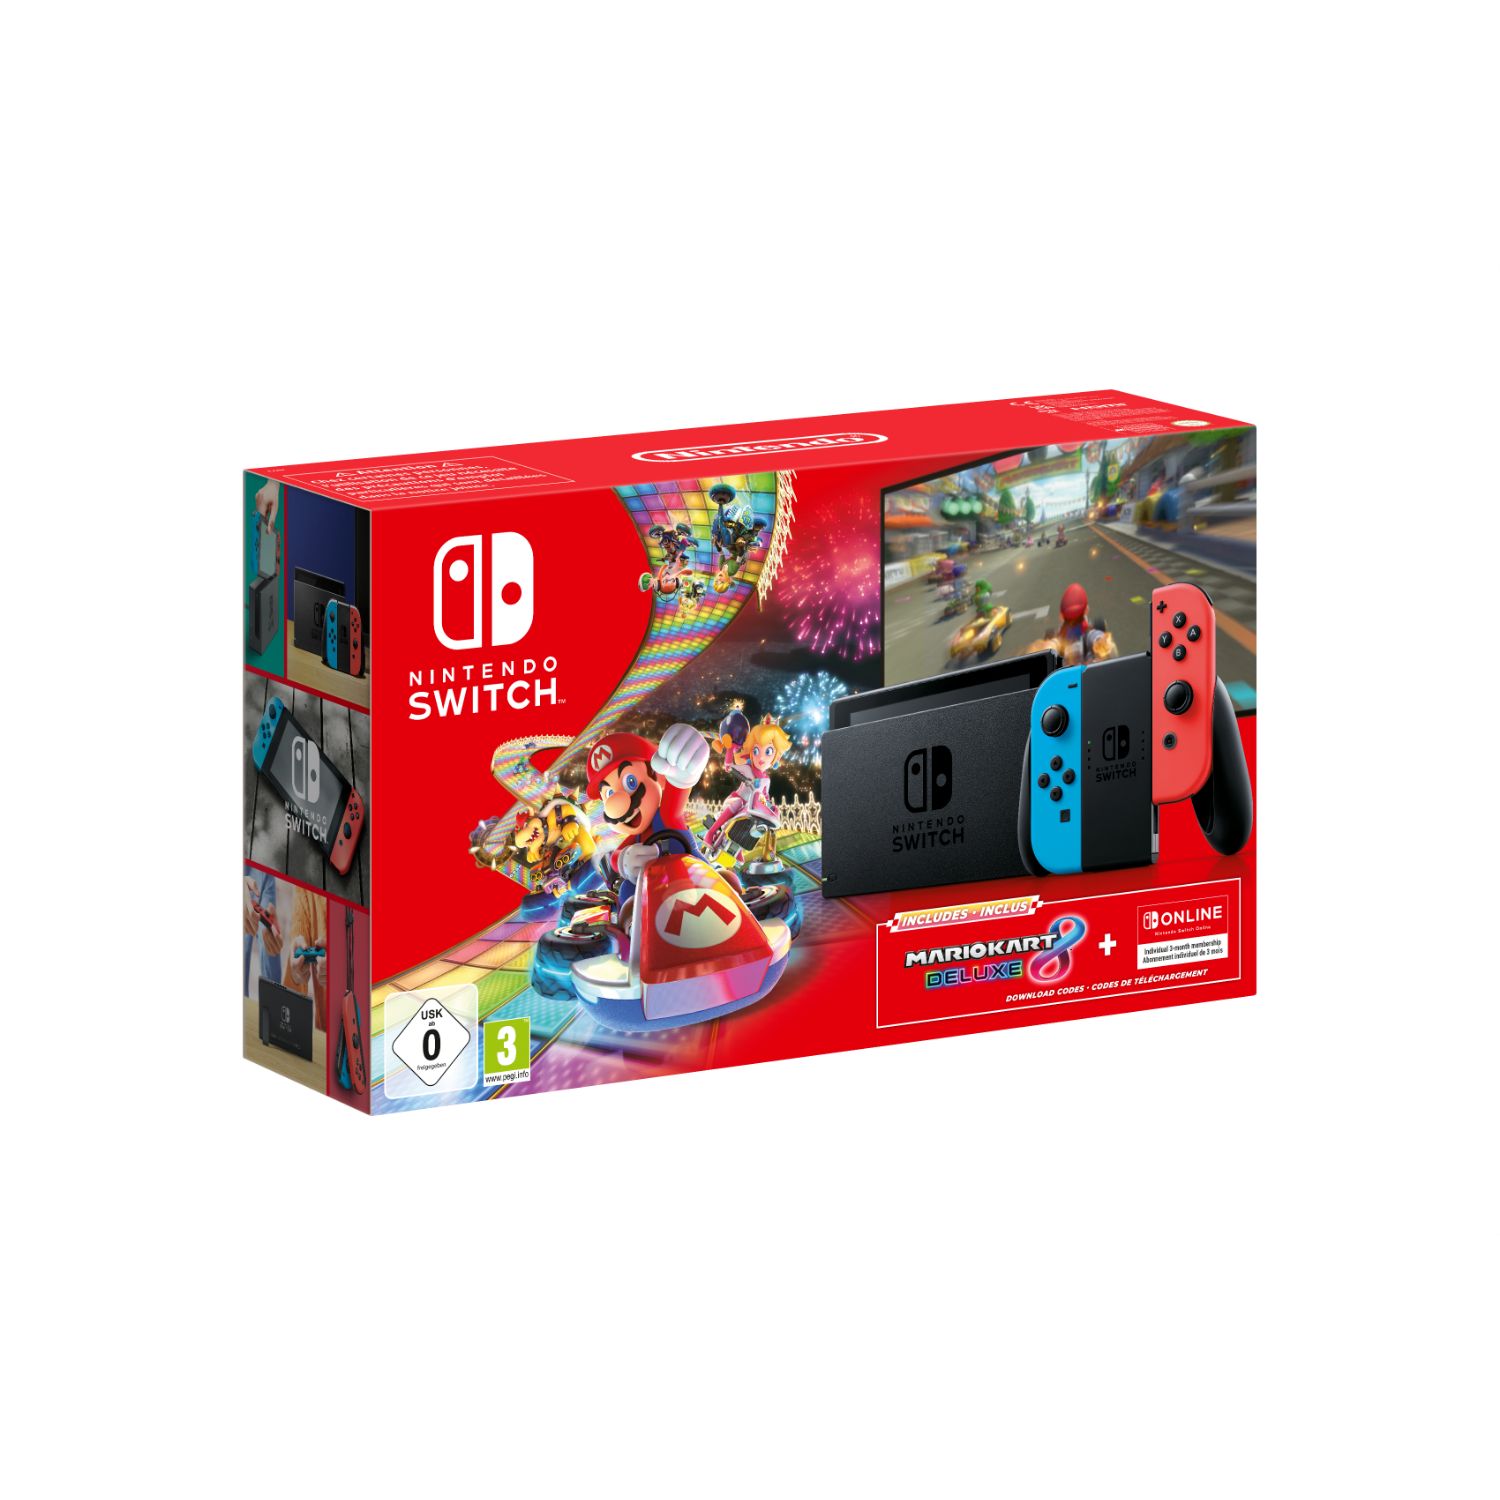 SW MKARTD 8 3M - Consola Nintendo Switch Rojo/Azul + Cdigo Juego Mario Kart Deluxe 8 + 3 Meses Suscripcin Nintendo Online